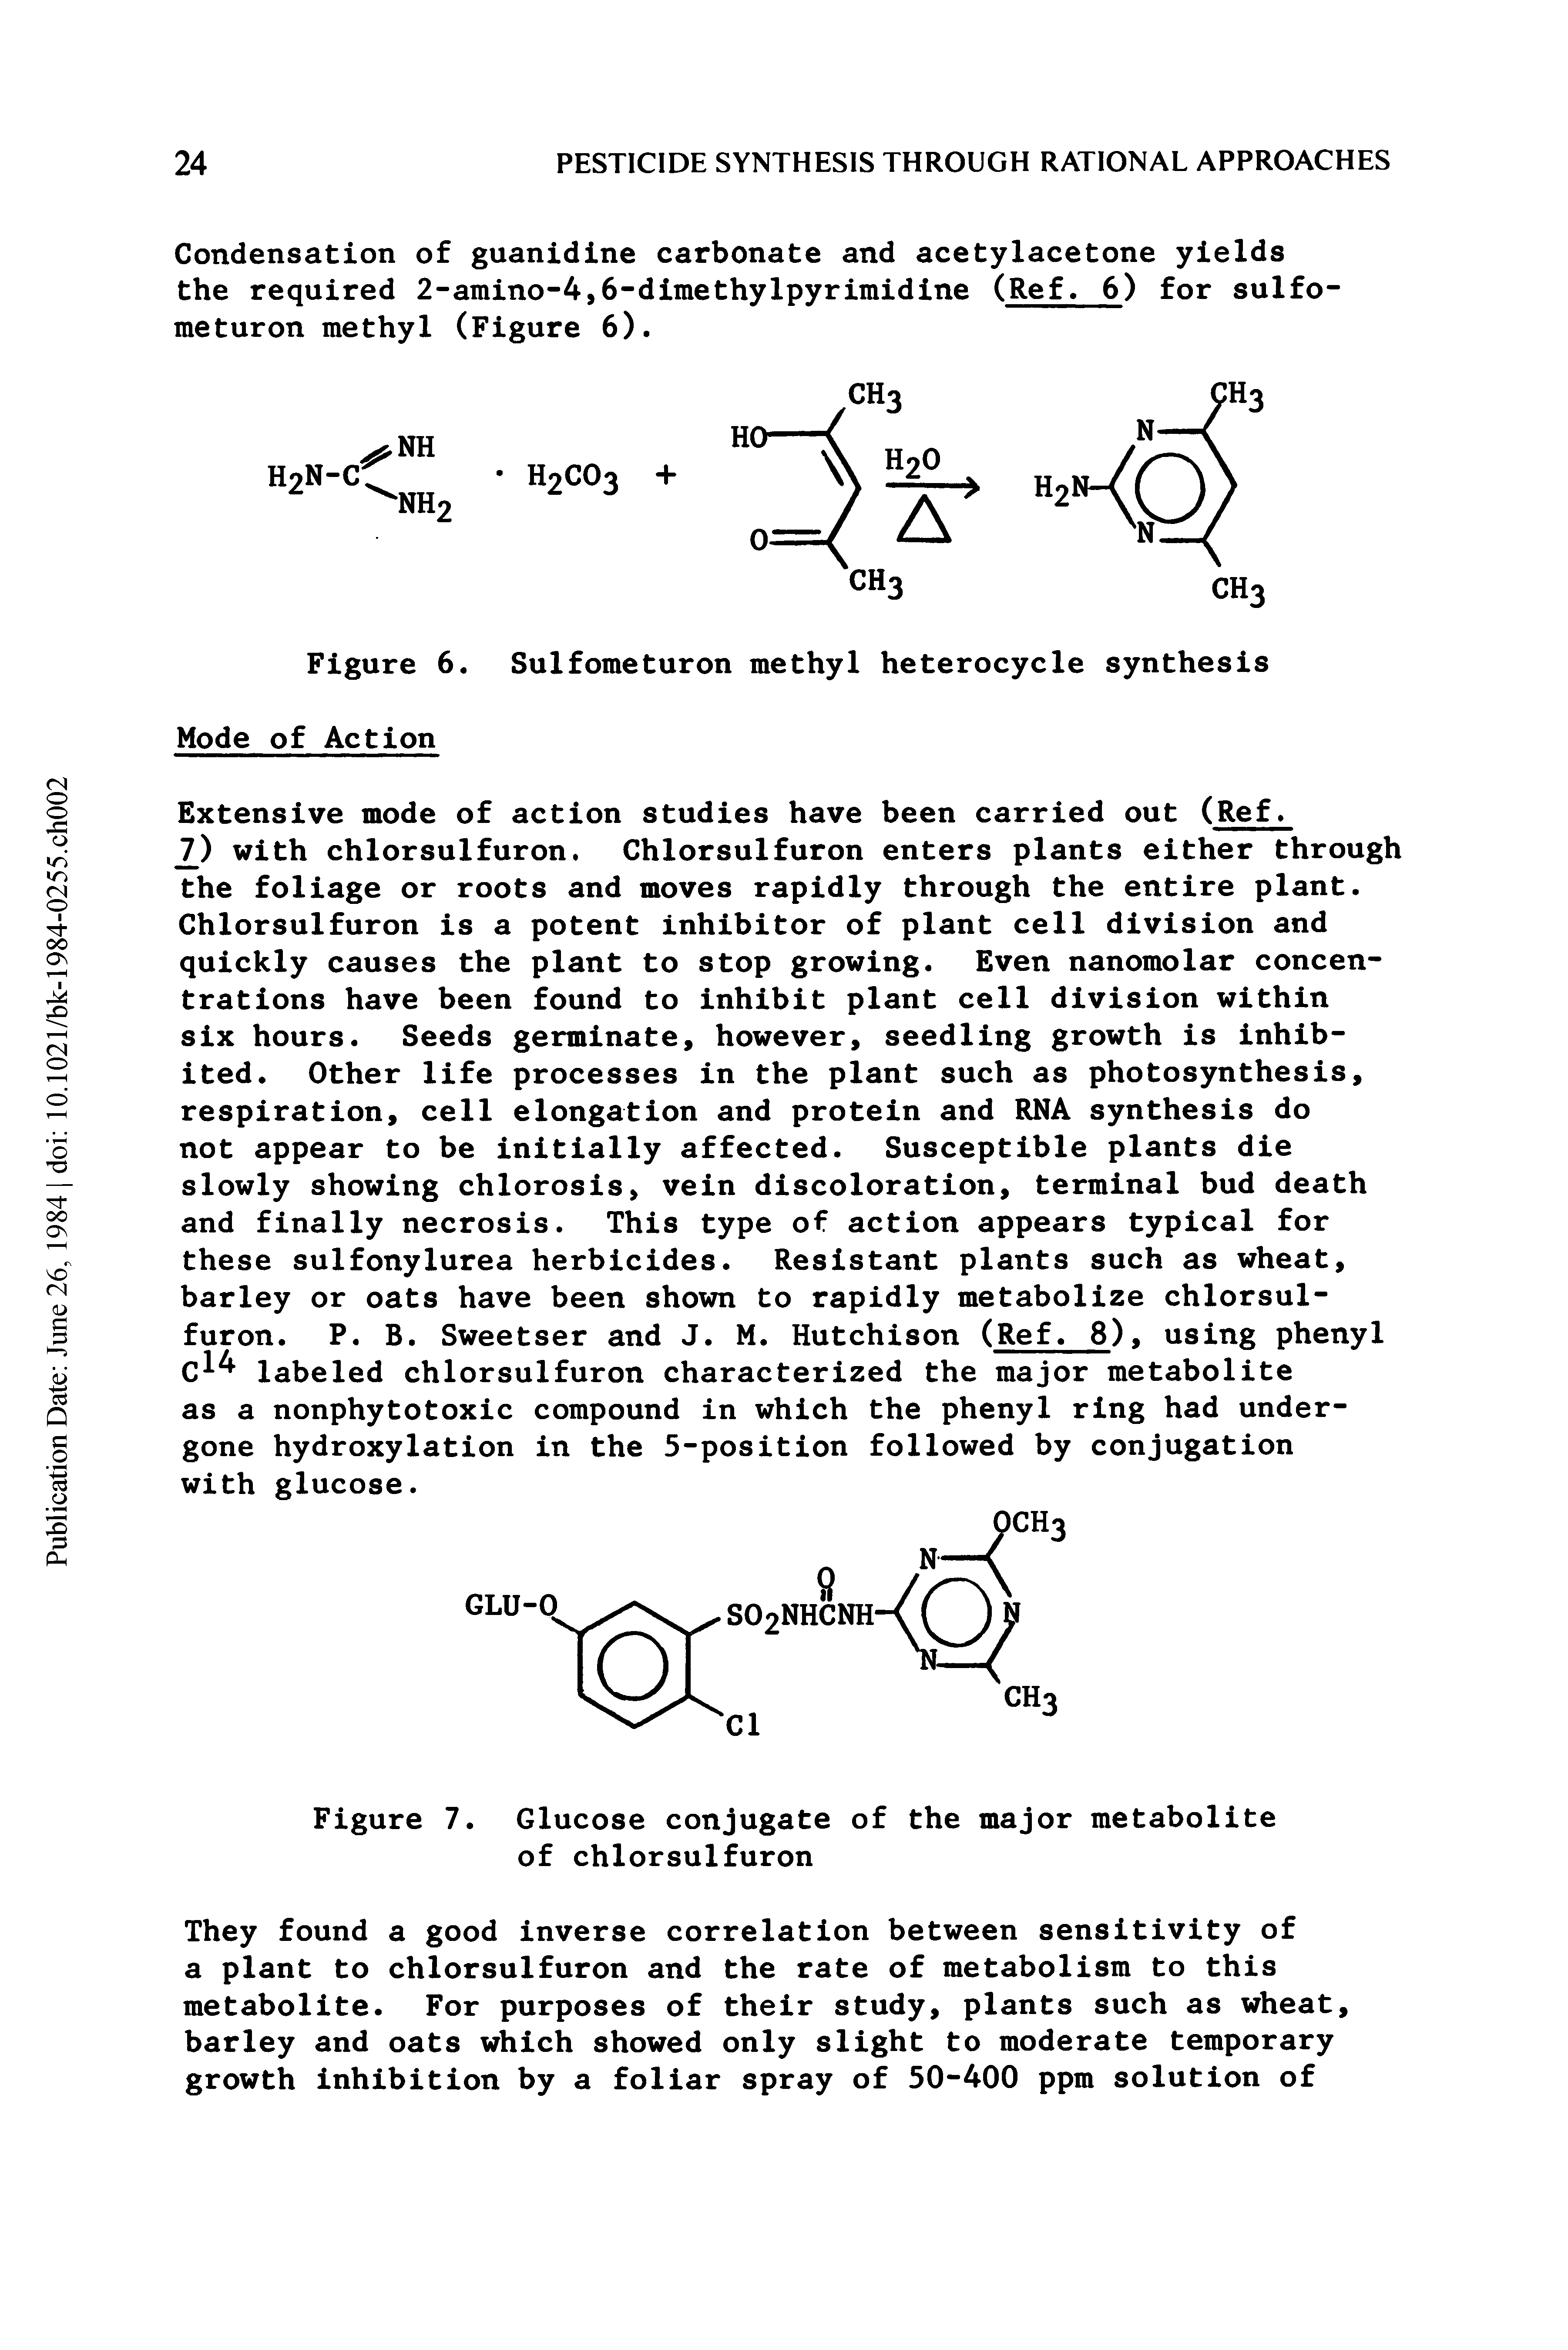 Figure 7. Glucose conjugate of the major metabolite of chlorsulfuron...